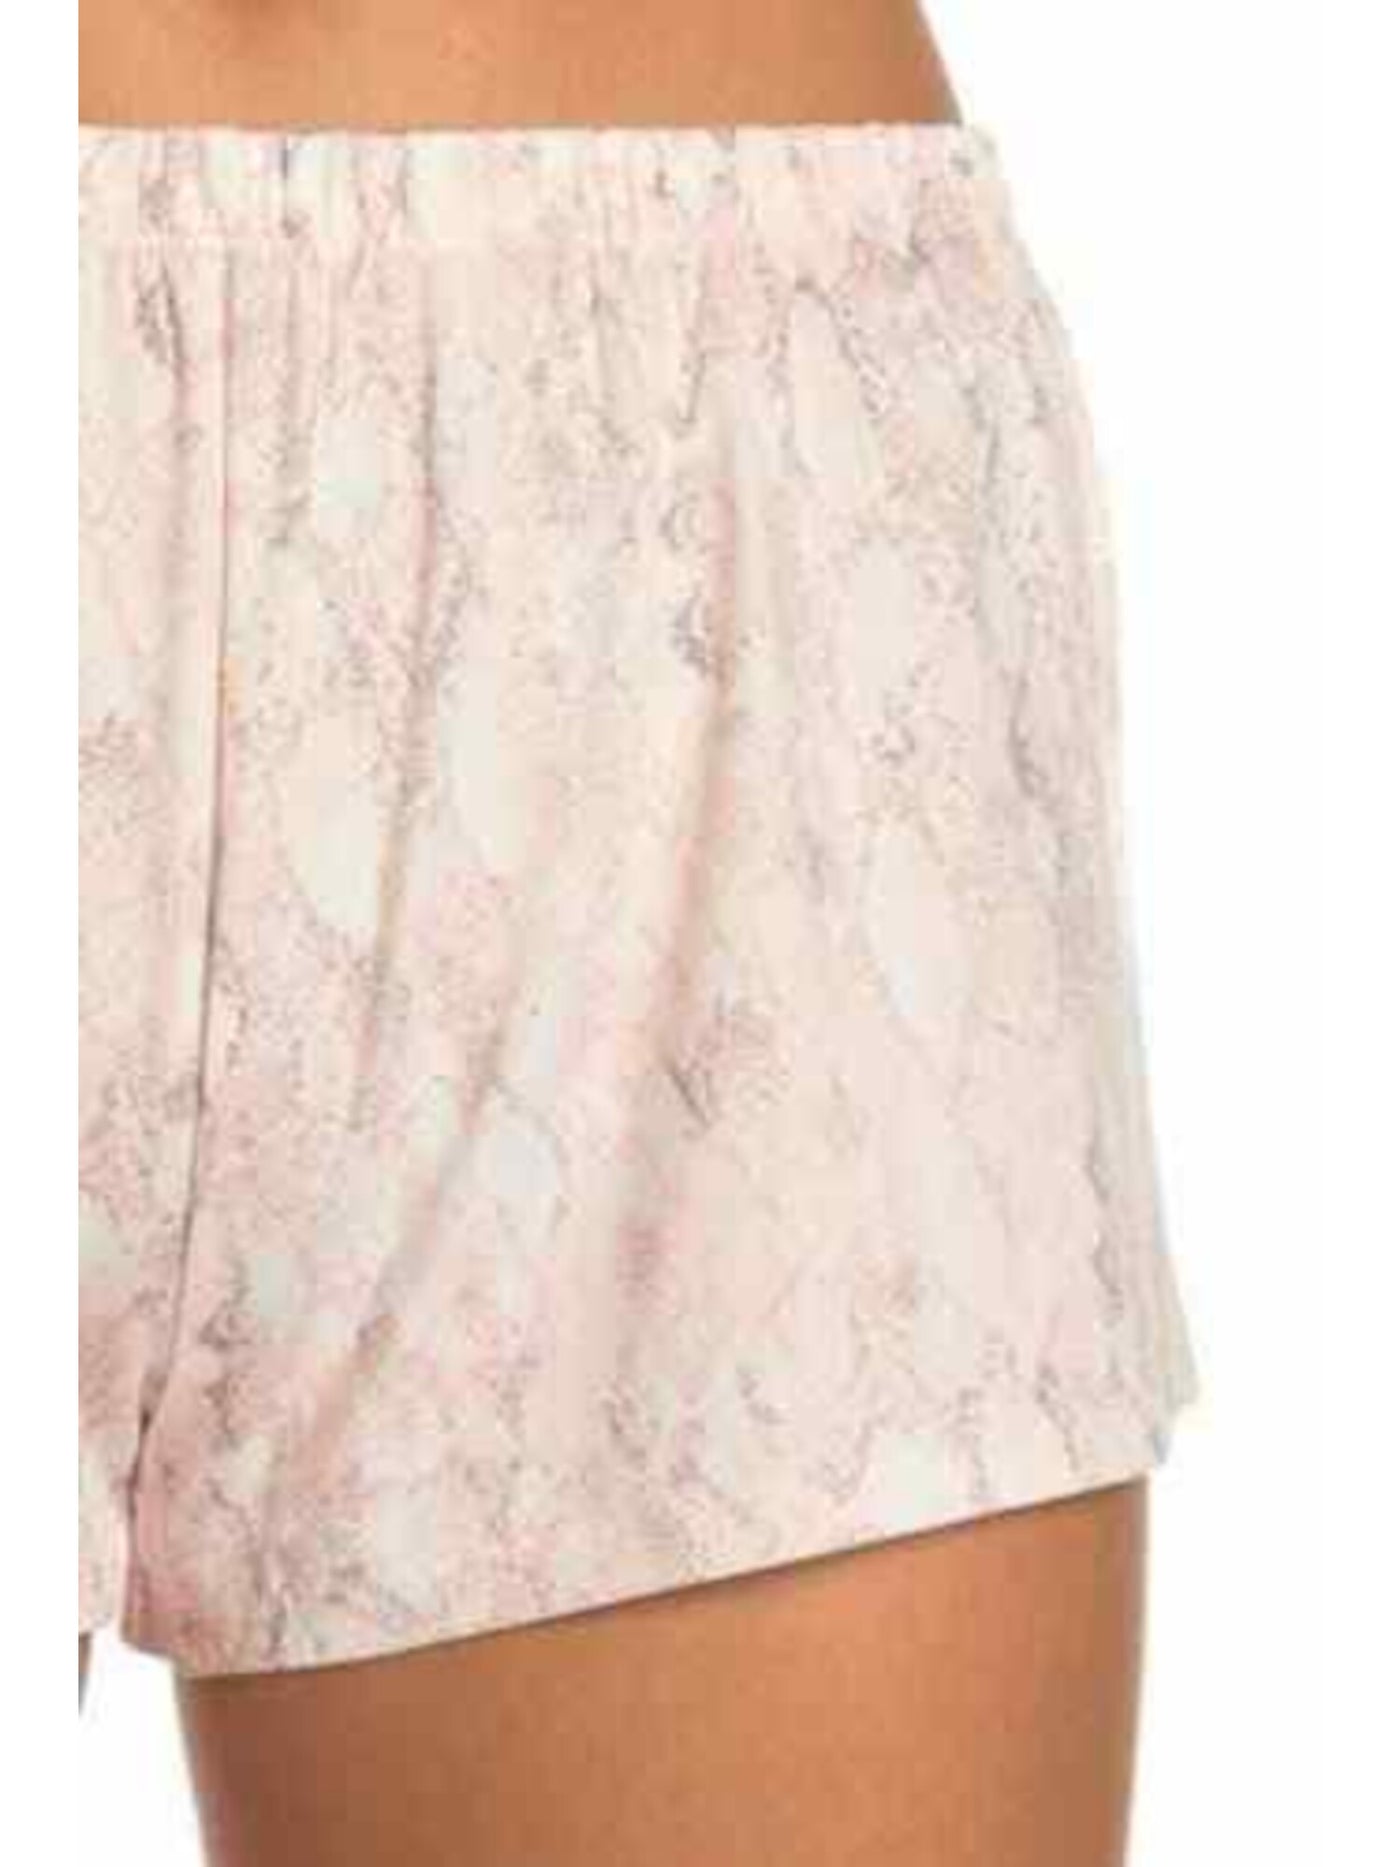 FLORA Womens Pink Patterned Button Up Top Lounge Shorts Pants Pajamas Juniors XL